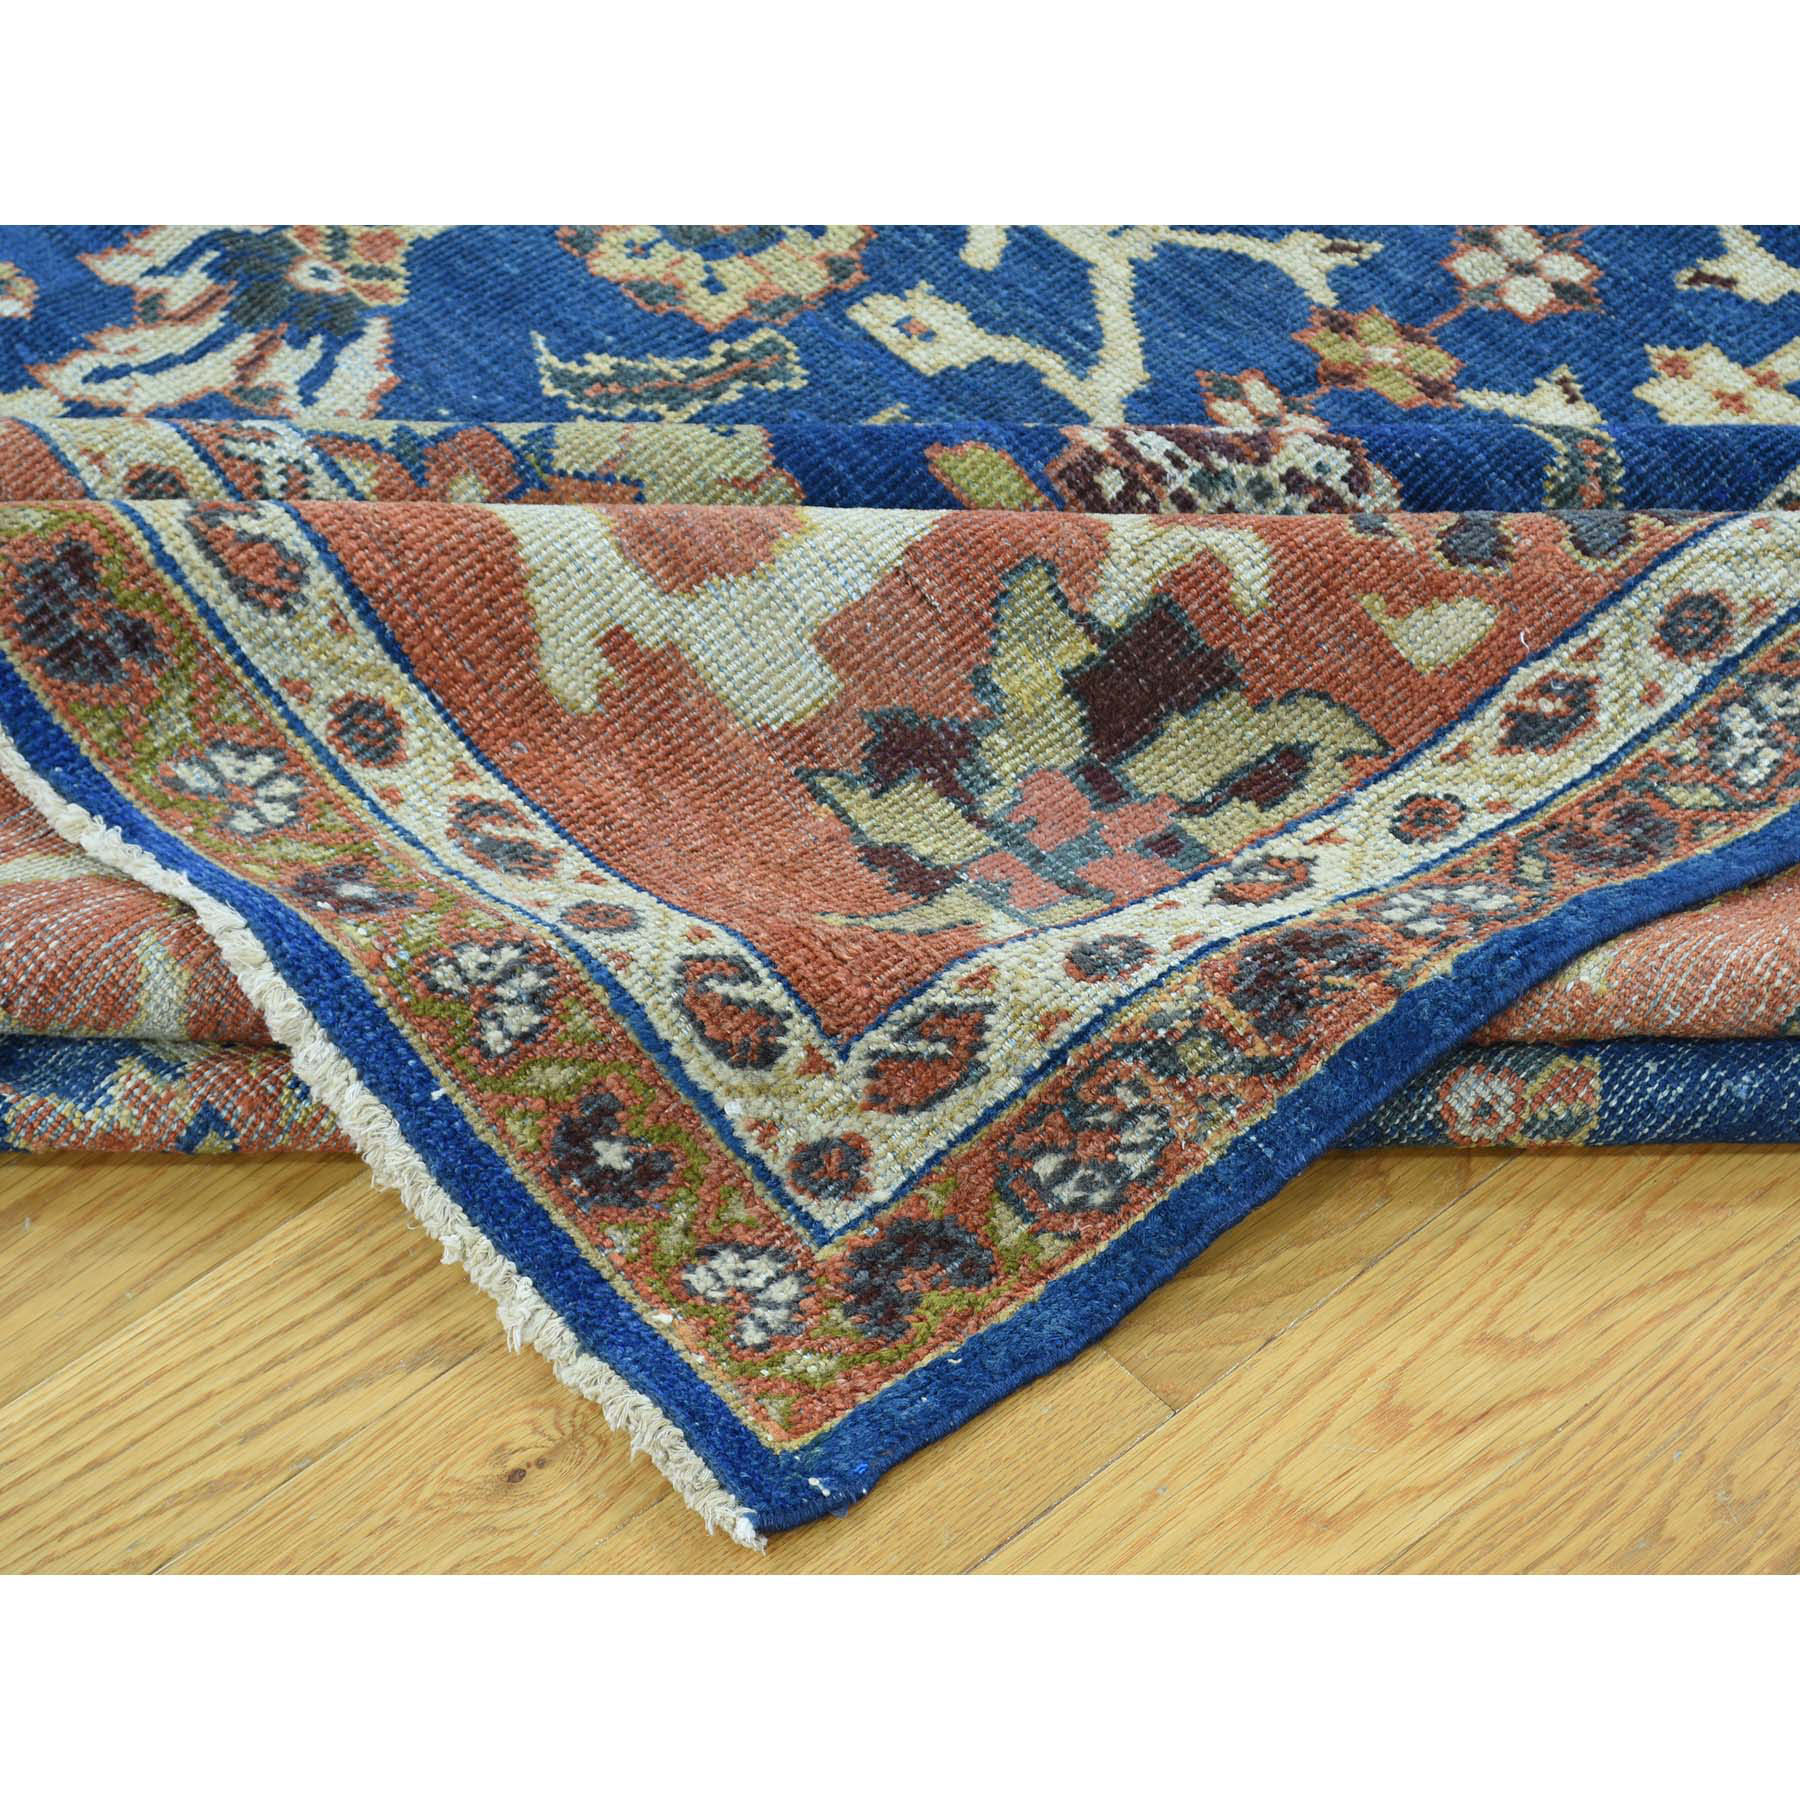 8-1 x10-1  Antique Persian Mahal Navy Blue Even Wear Handmade Rug 